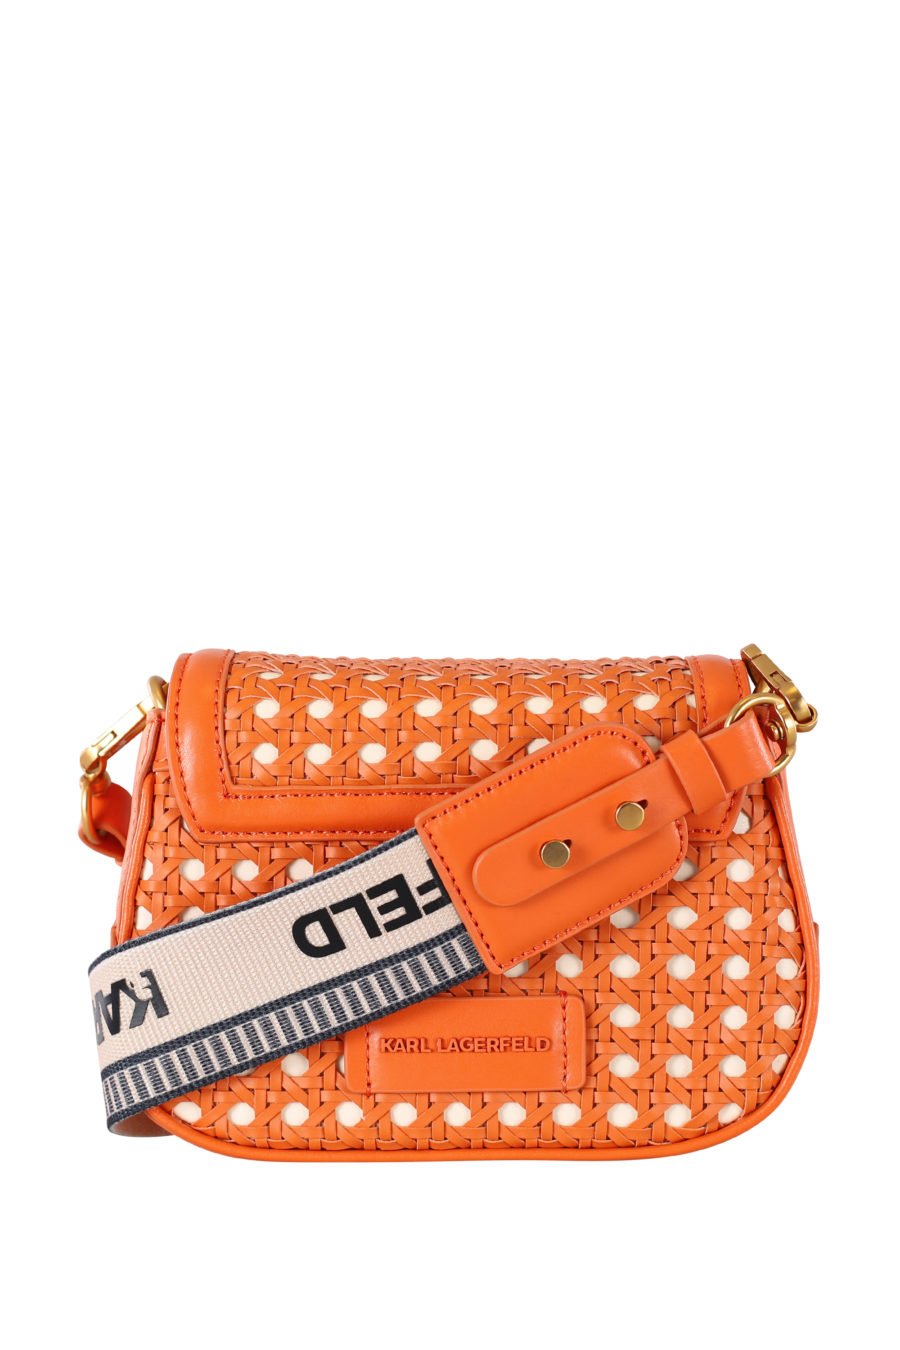 Petit sac à bandoulière orange avec logo orange - IMG 1579